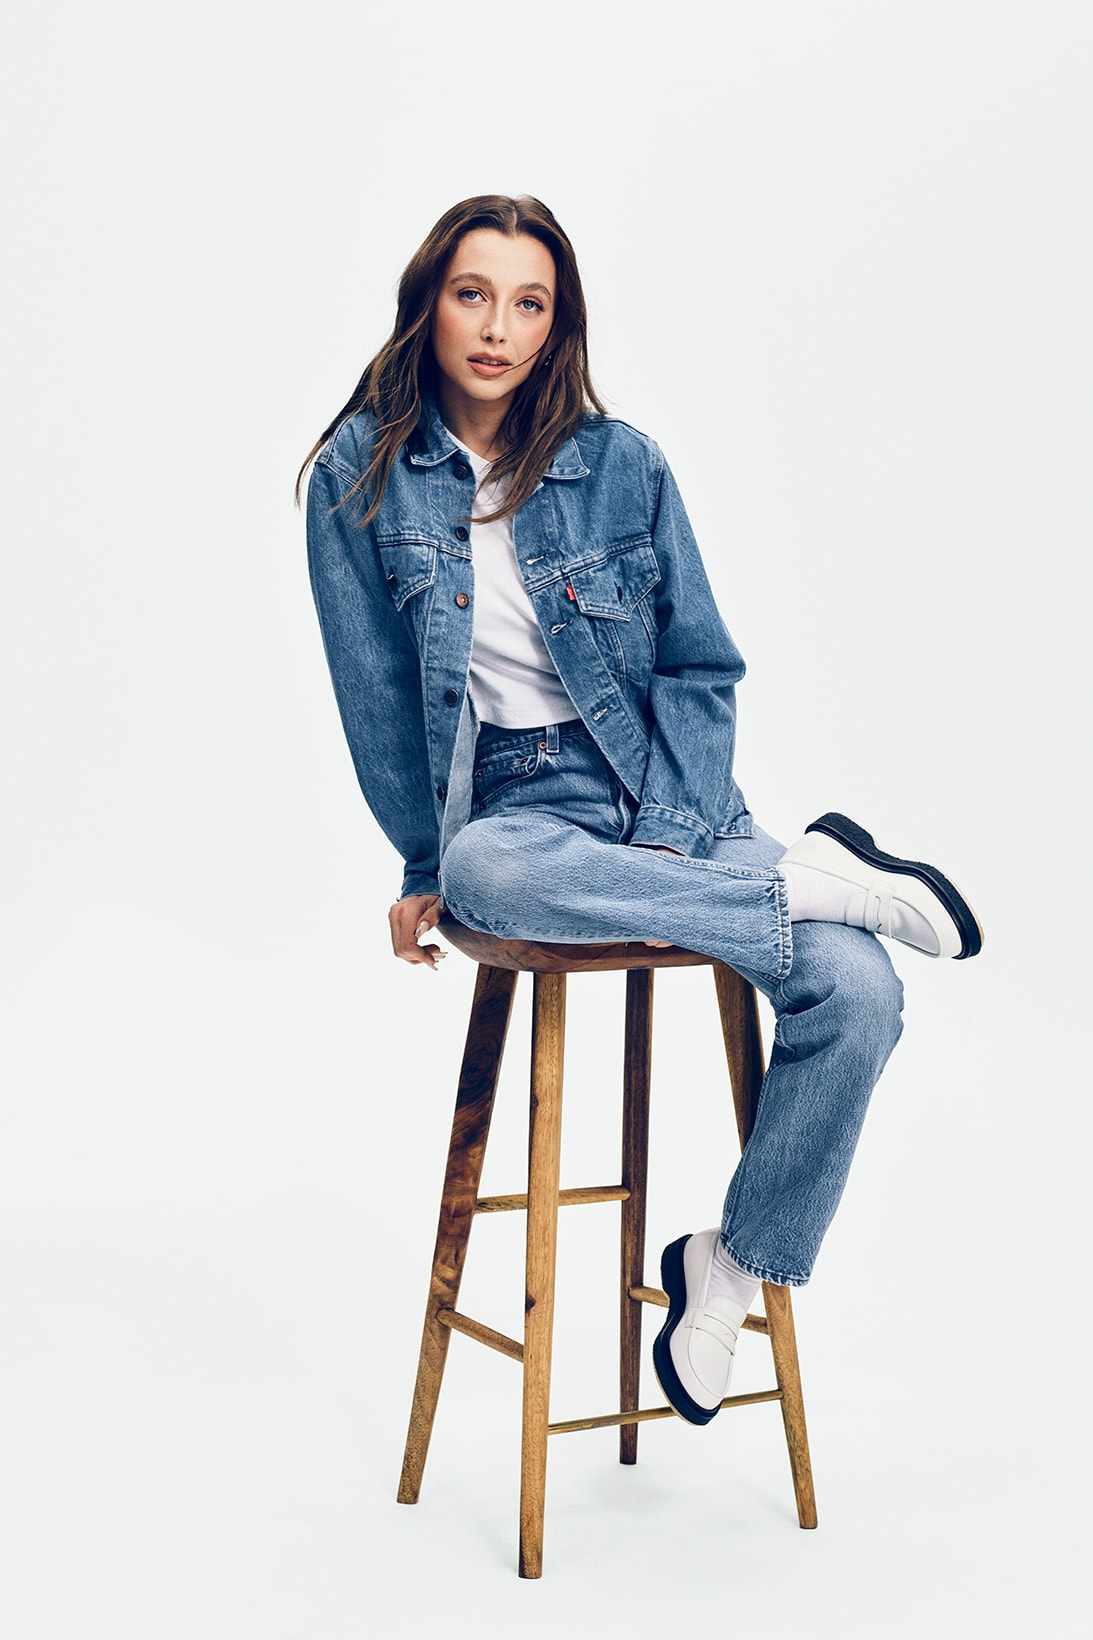 Levi's 501 Originals Jeans Campaign Emma Chamberlain Jacket Shoes Tee